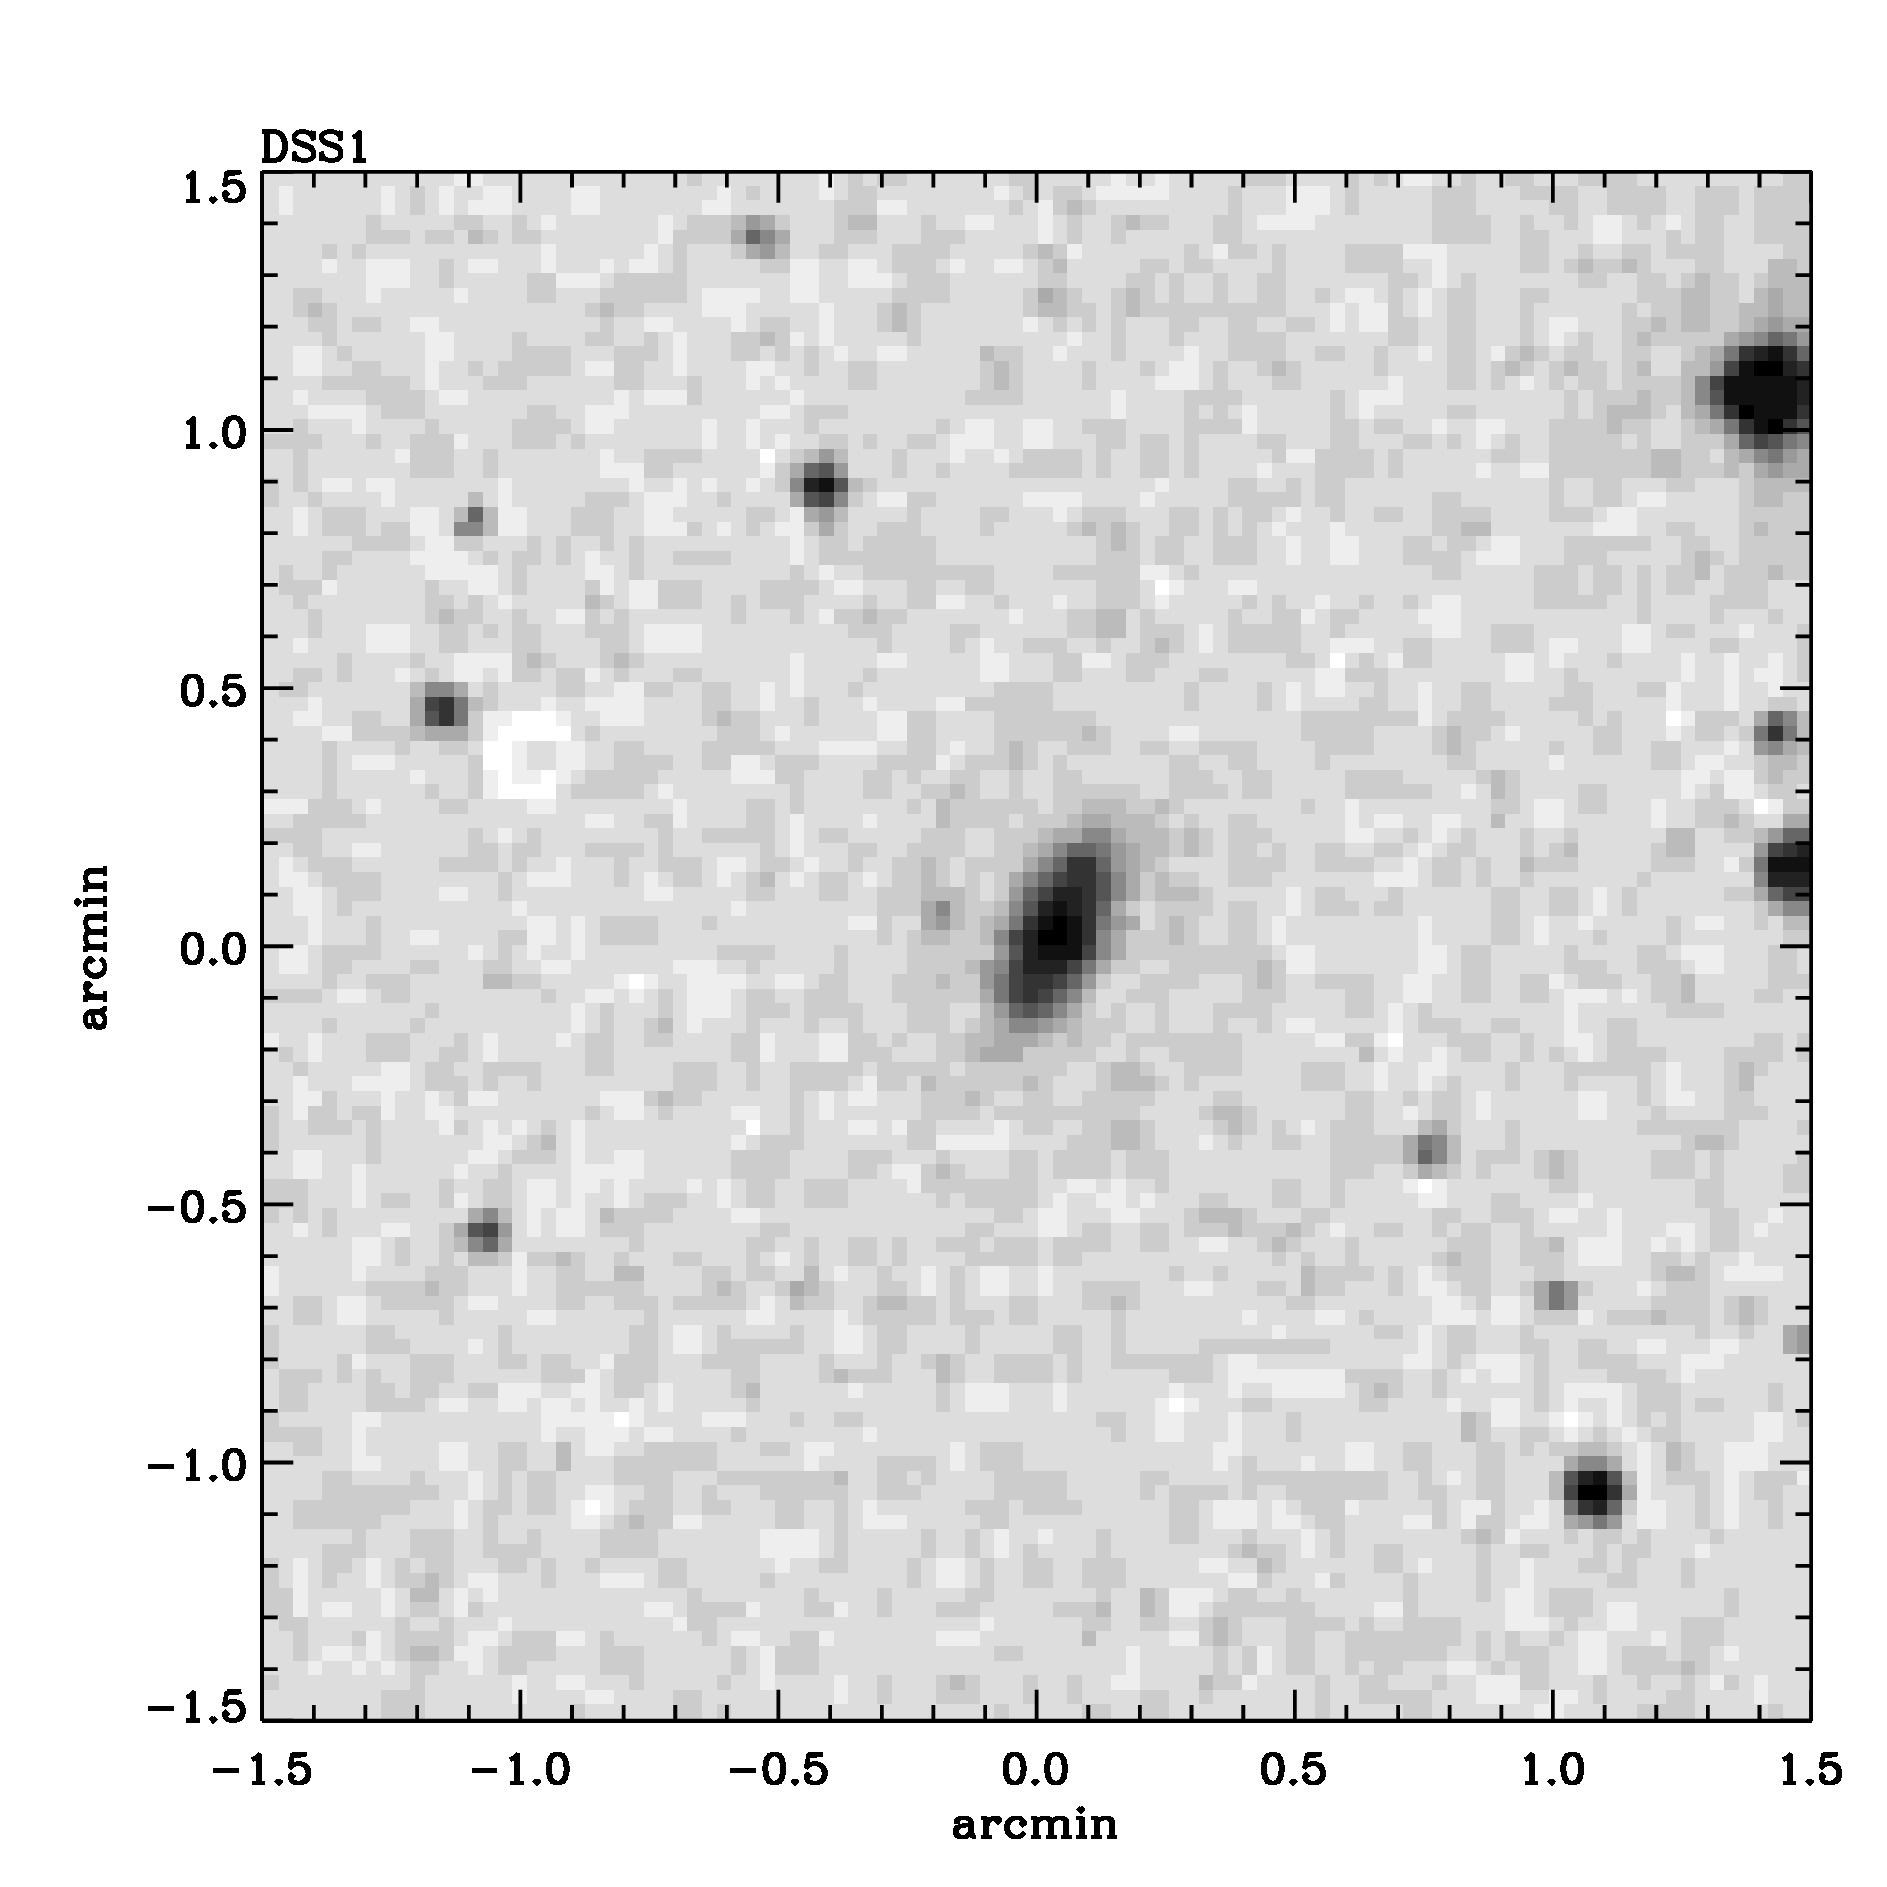 Optical image for SWIFT J2223.8+1143